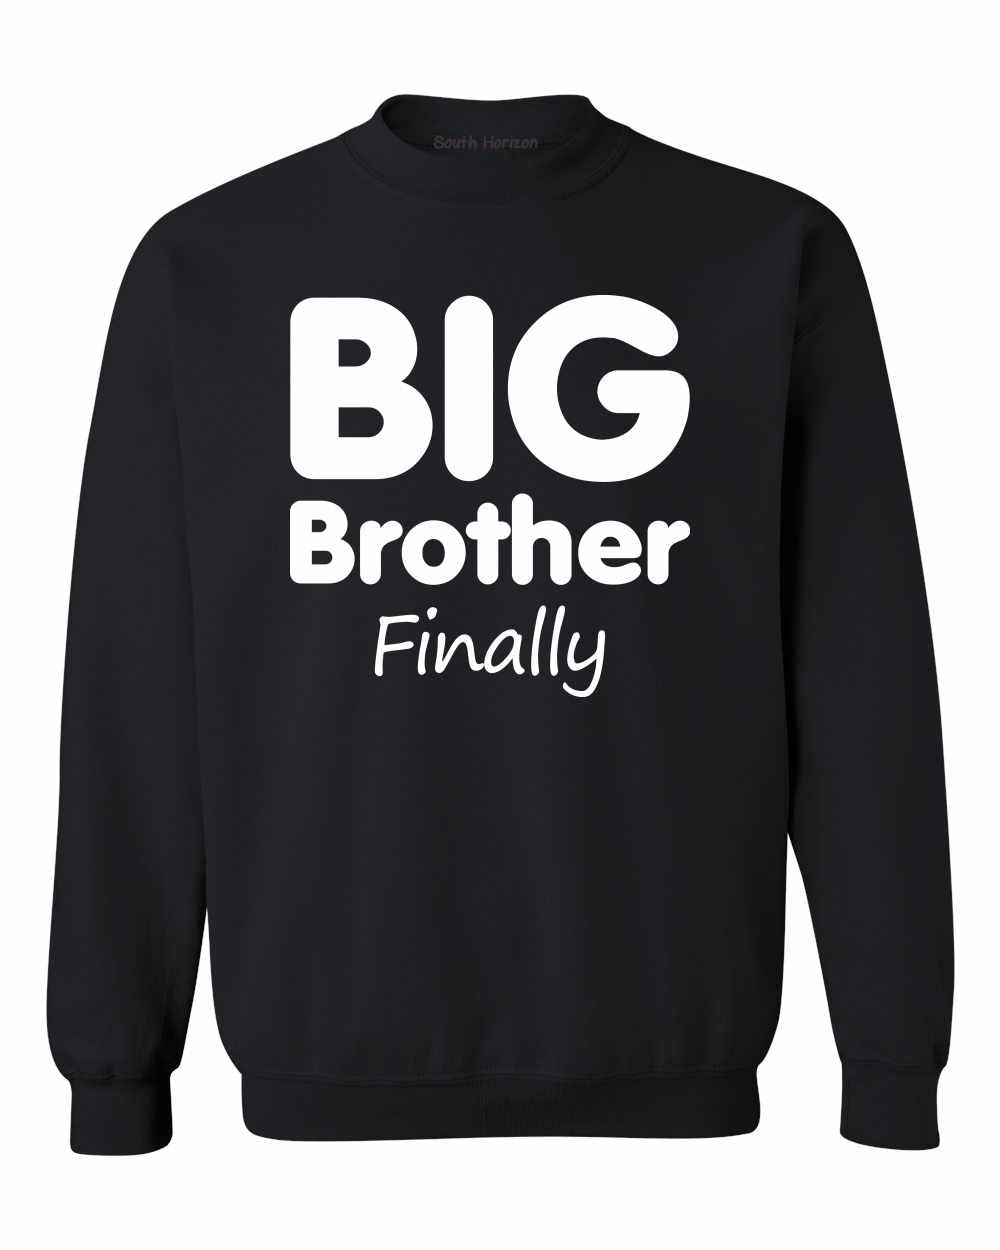 Big Brother Finally on SweatShirt (#962-11)